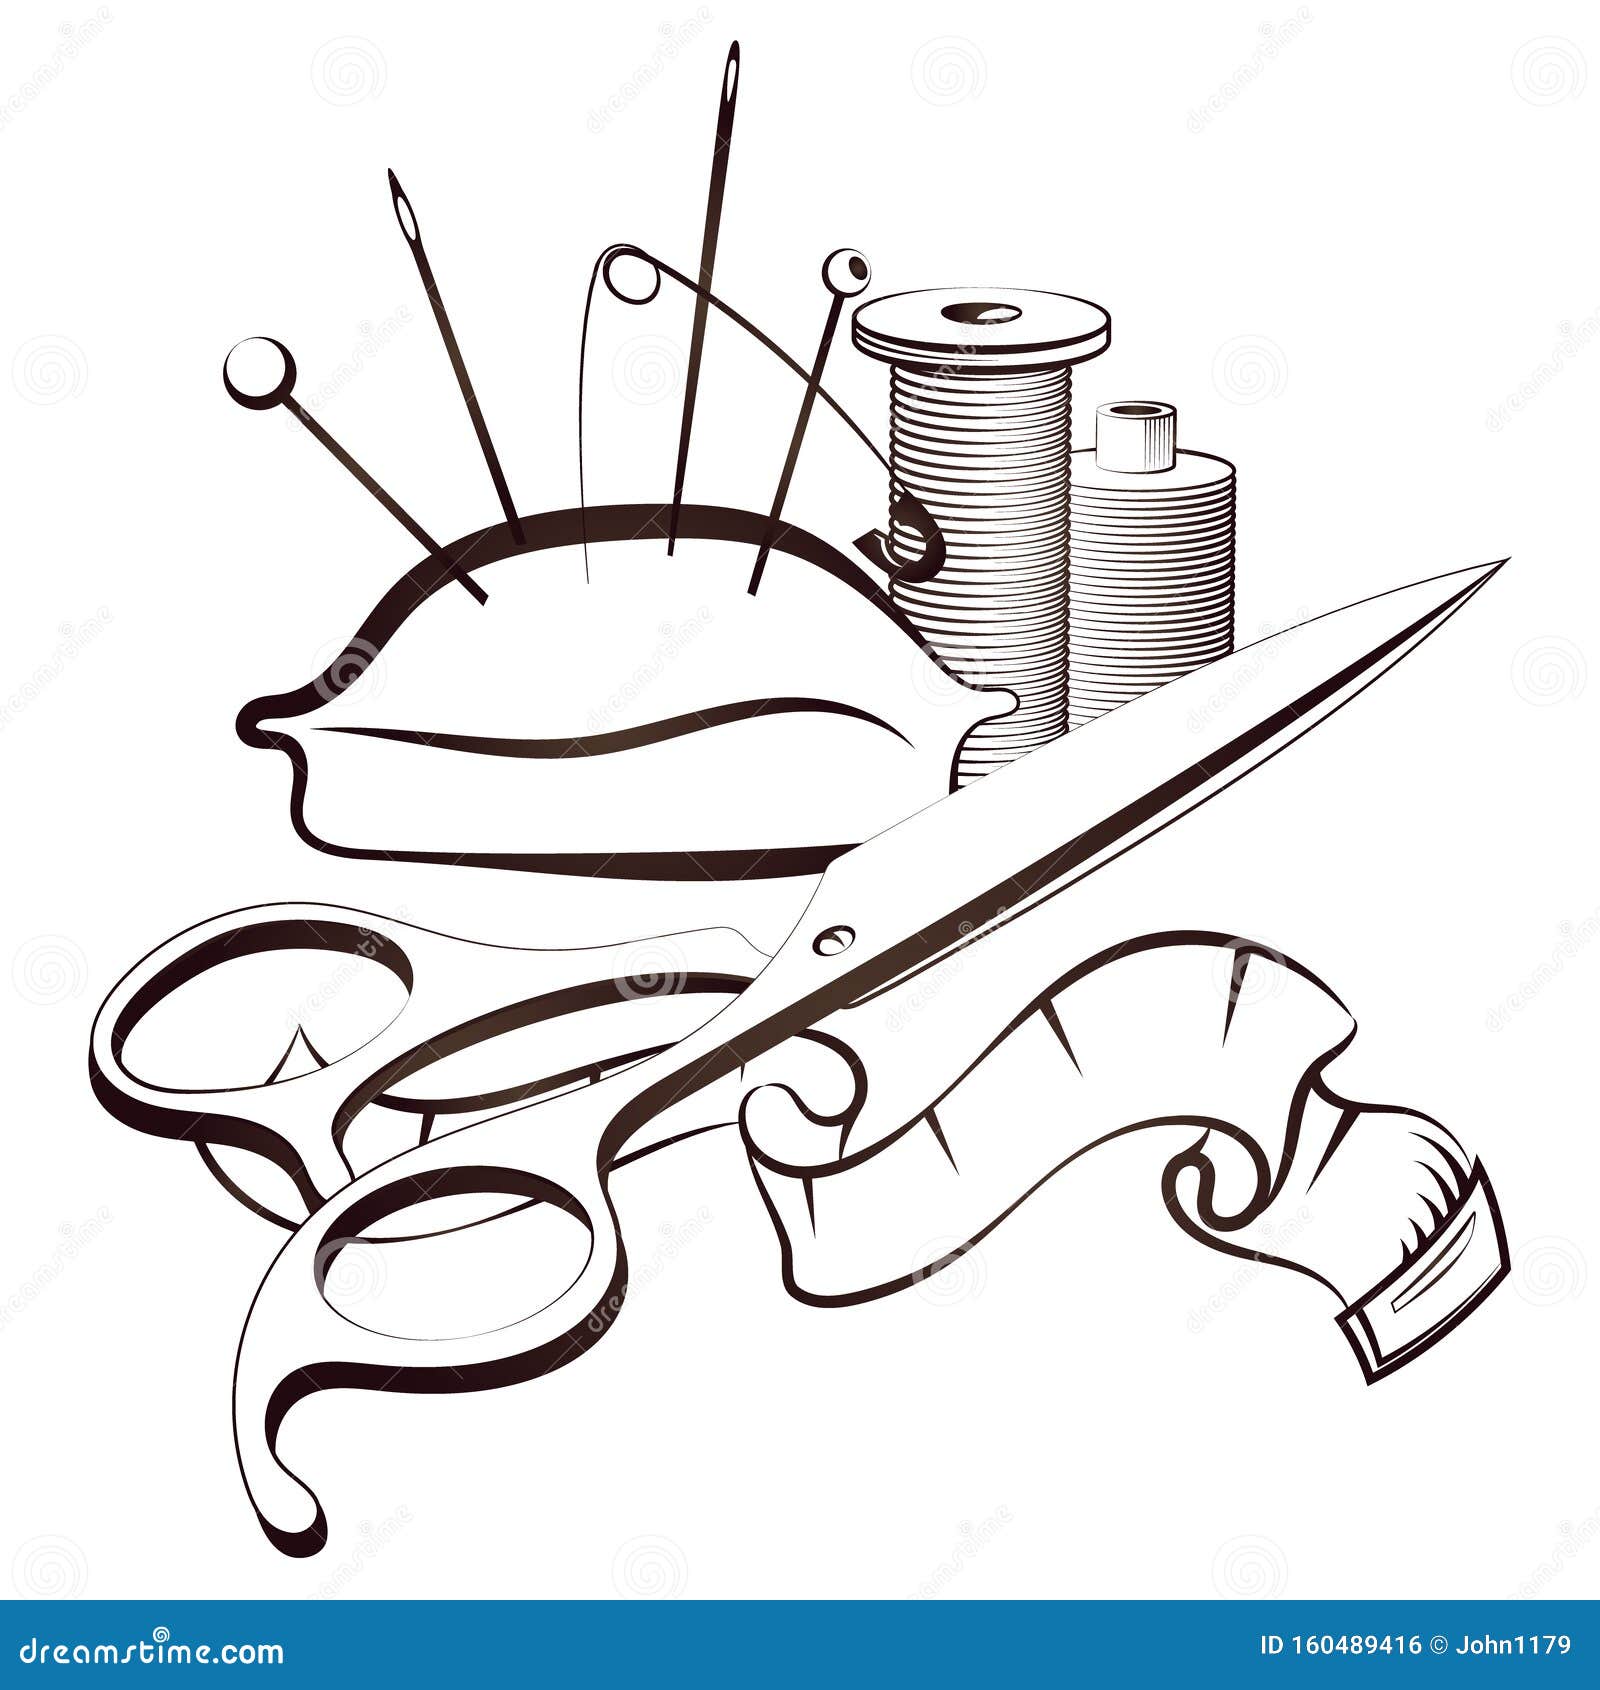 Scissors and sewing tools stock illustration. Illustration of symbol ...